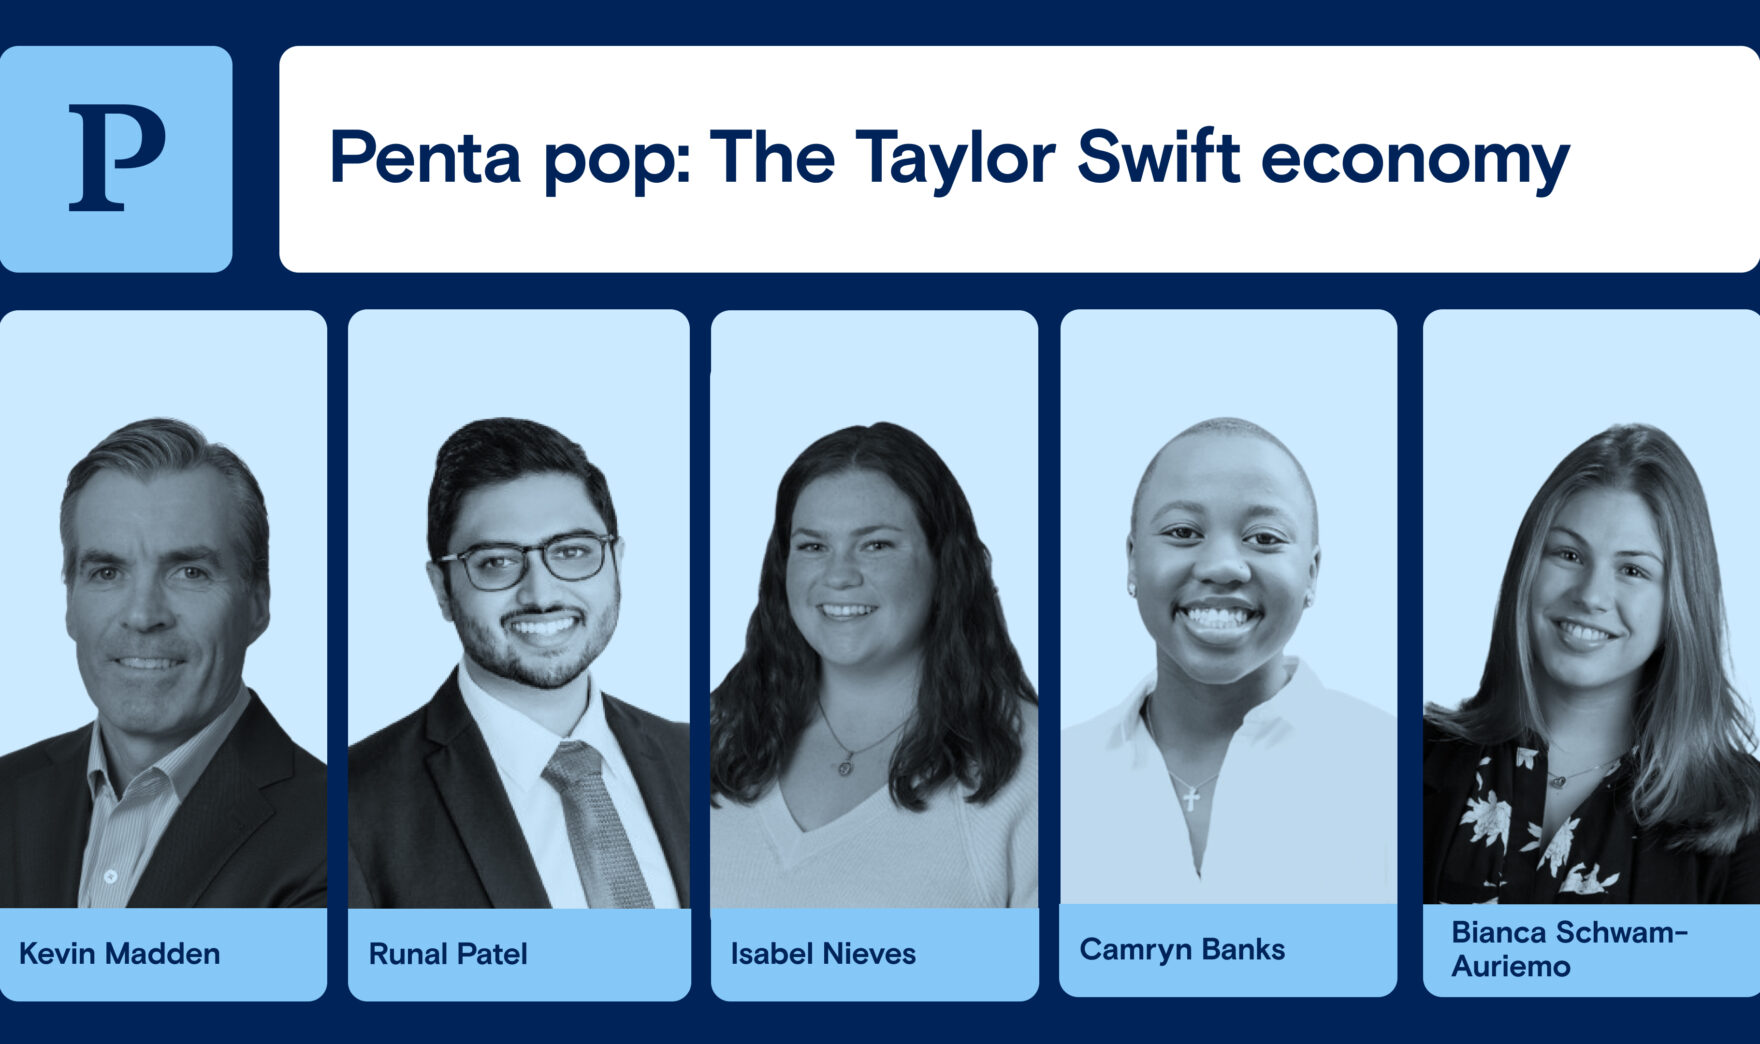 Penta pop: The Taylor Swift economy